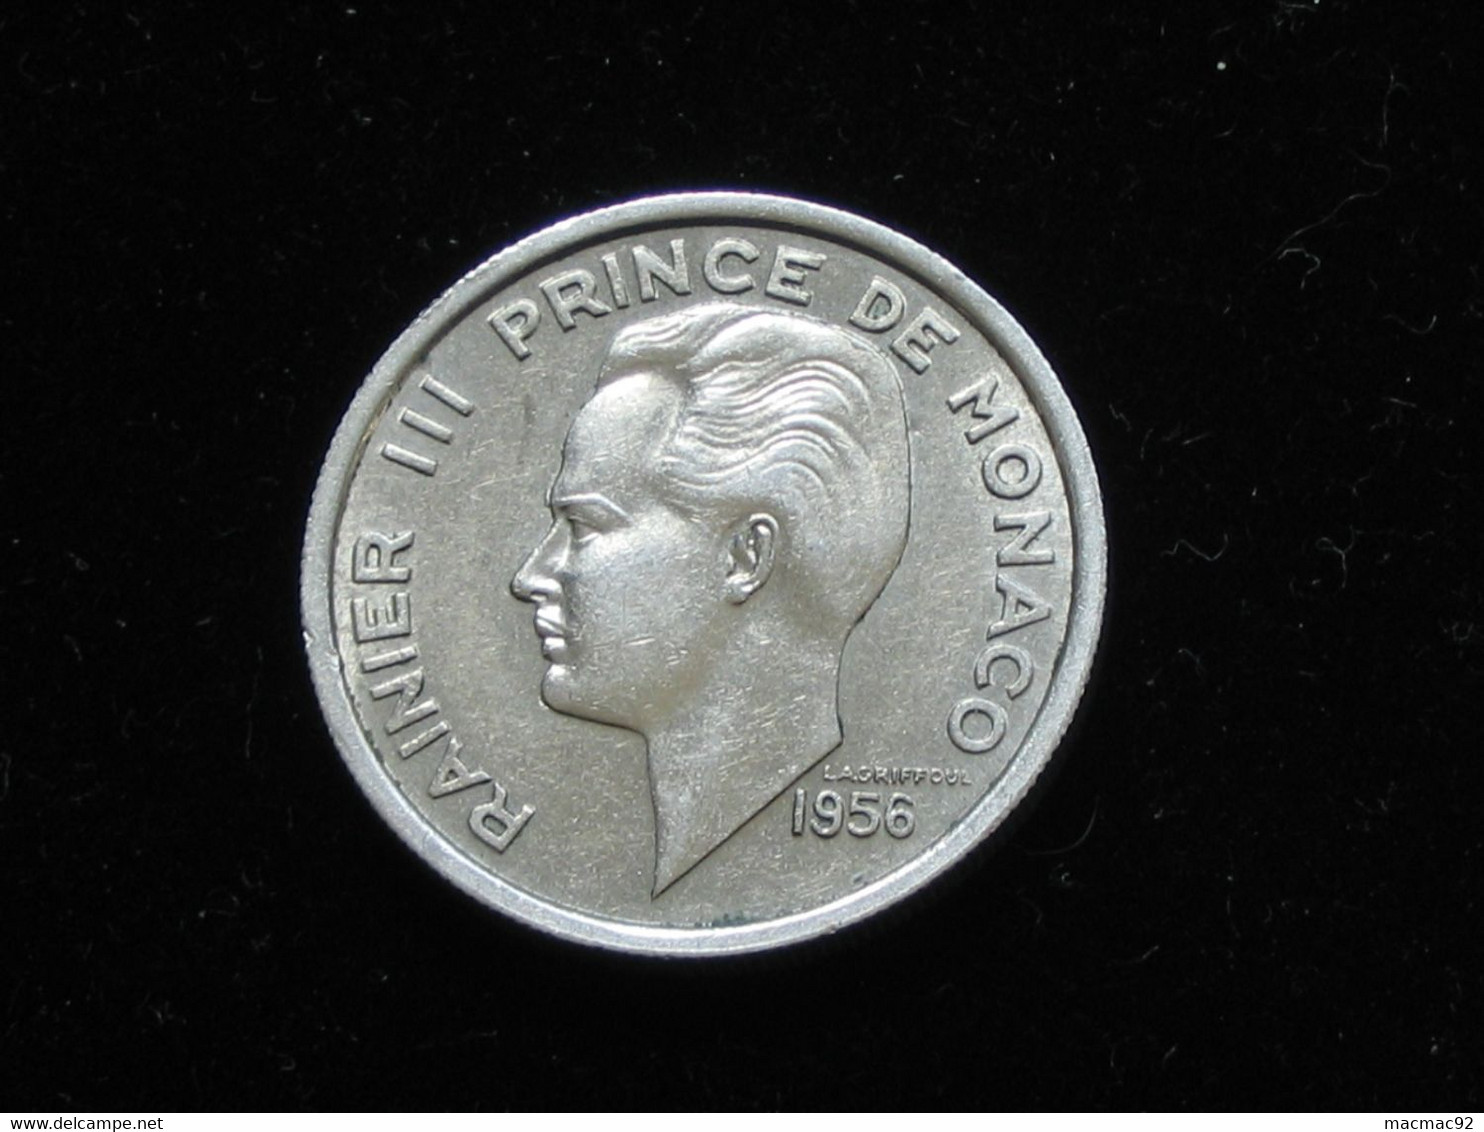 MONACO - 100 Frs 1956 - Rainier III Prince De Monaco **** EN ACHAT IMMEDIAT **** - 1949-1956 Anciens Francs